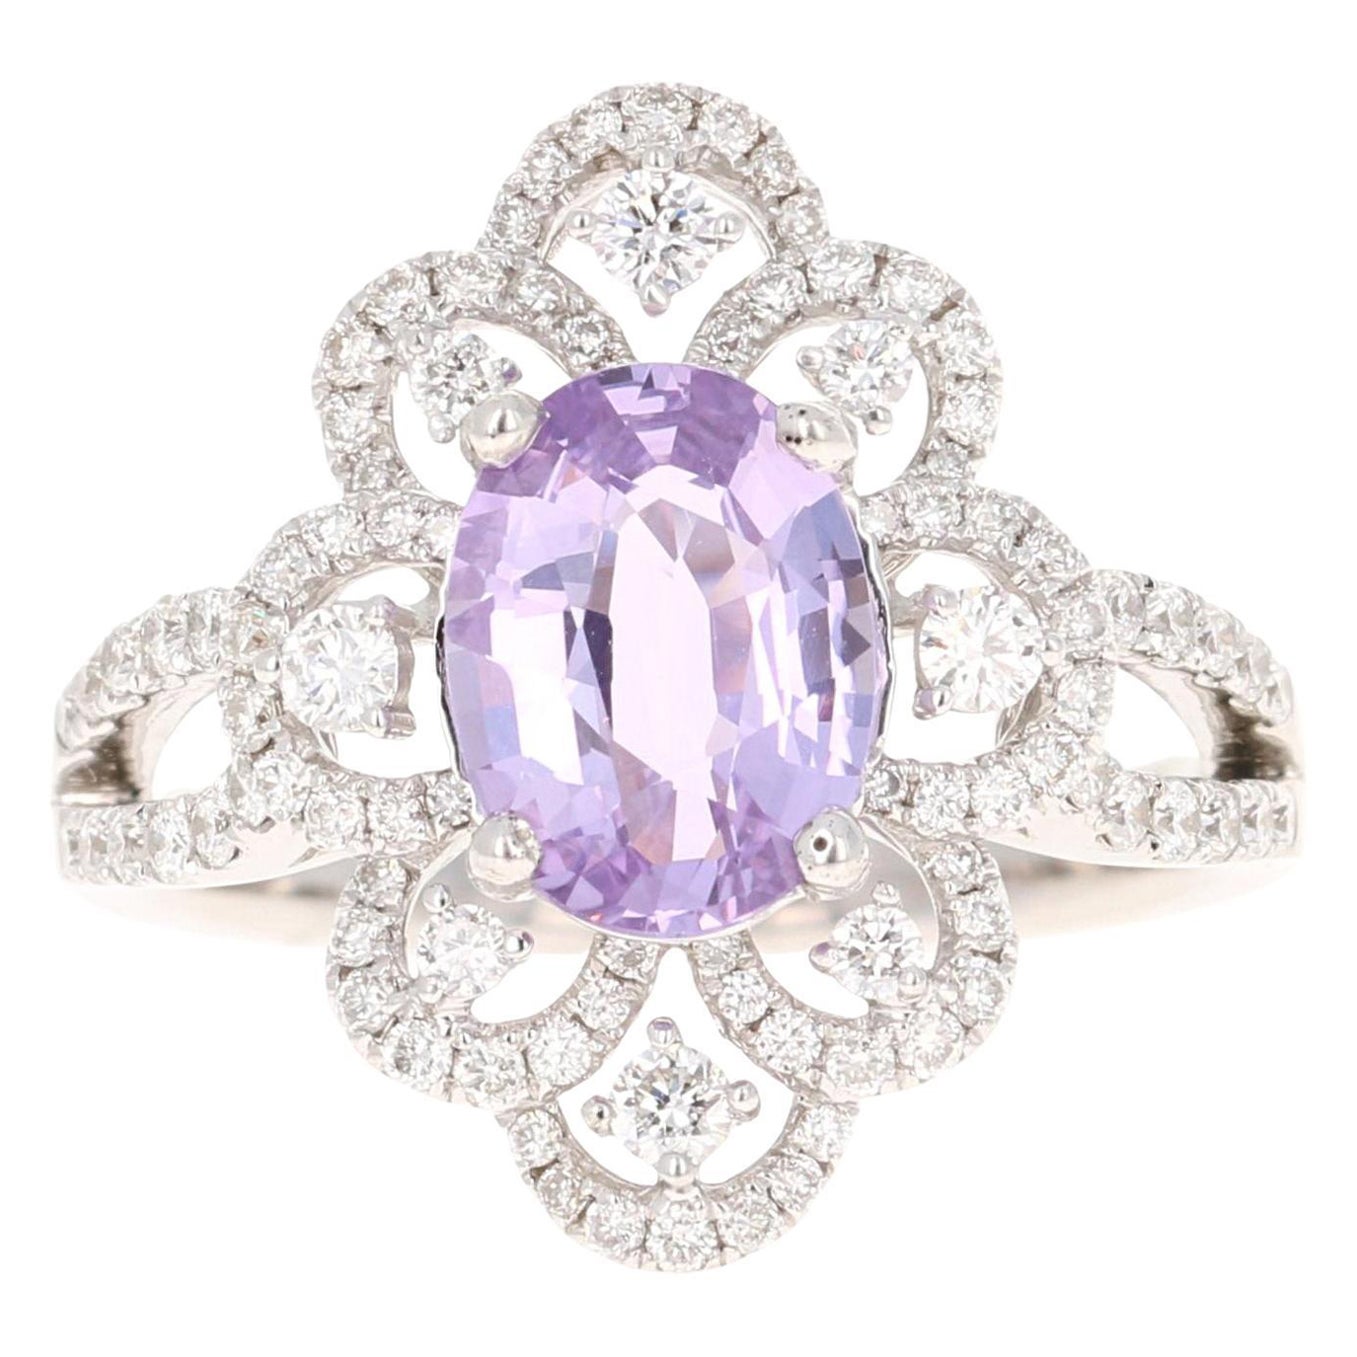 2.76 Carat Purple Sapphire Diamond 18 Karat White Gold Ring